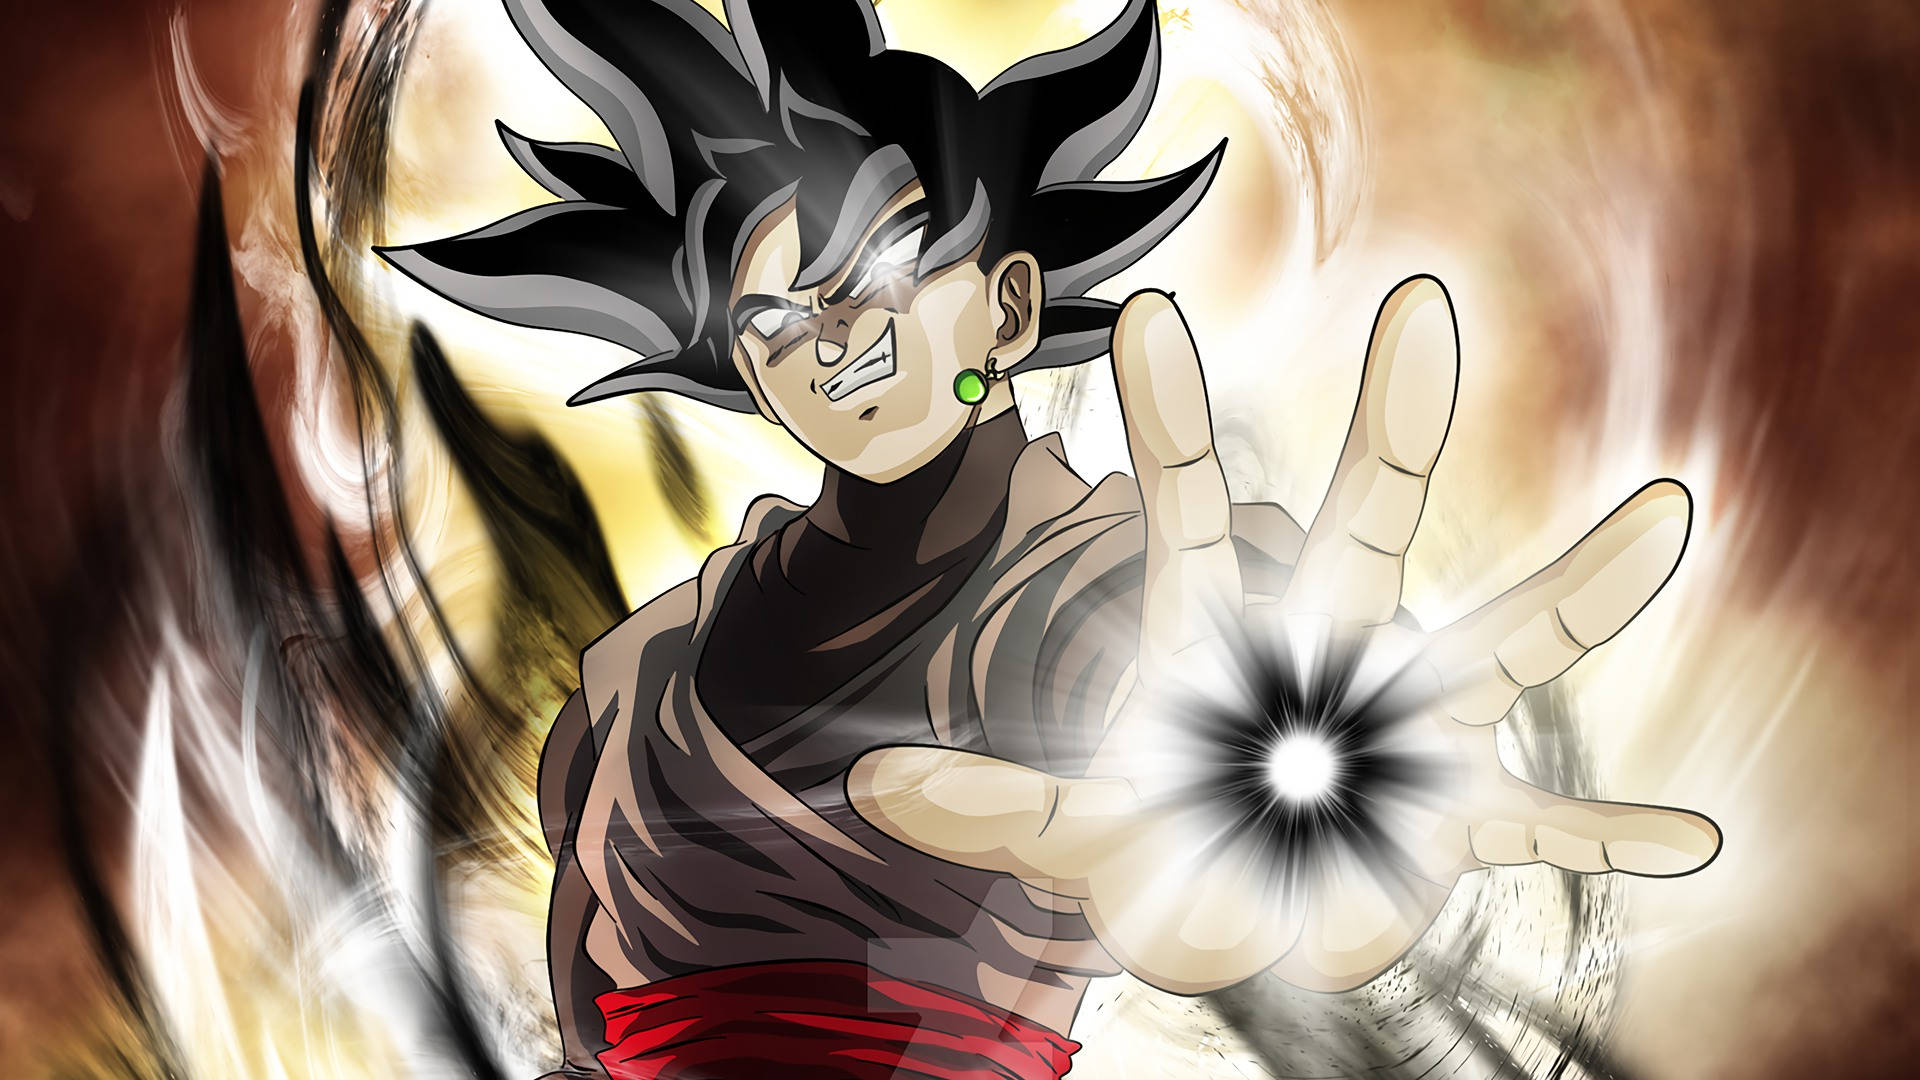 Mighty Goku Black - The Dark Saiyan, Displayed On An Iphone Screen